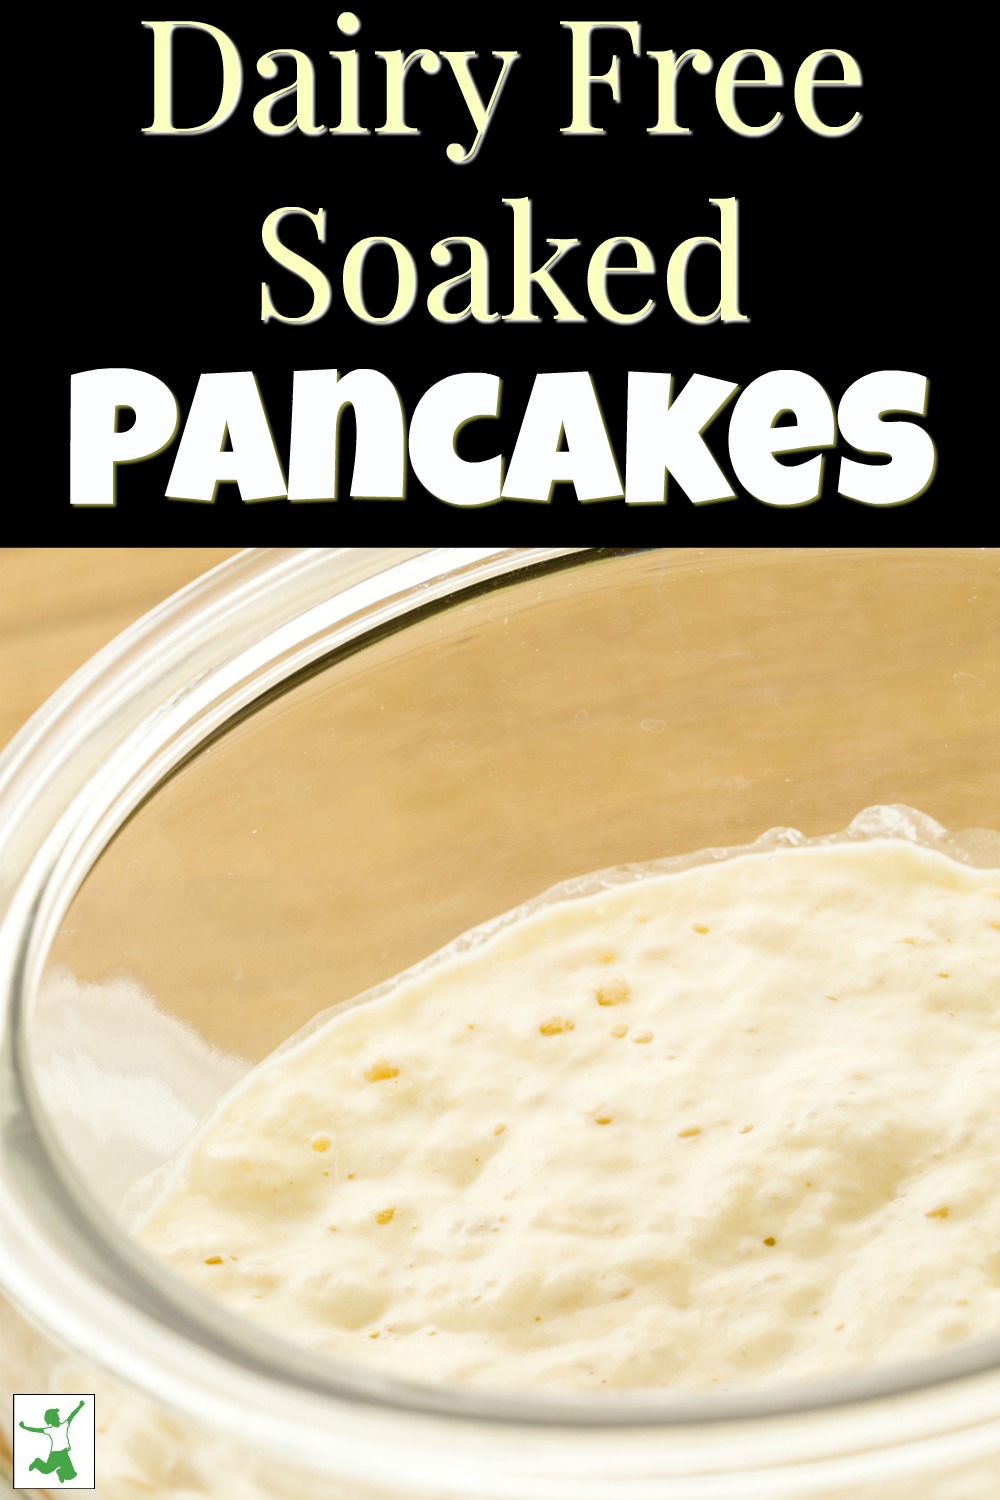 Dairy-free Soaked Pancakes Recipe